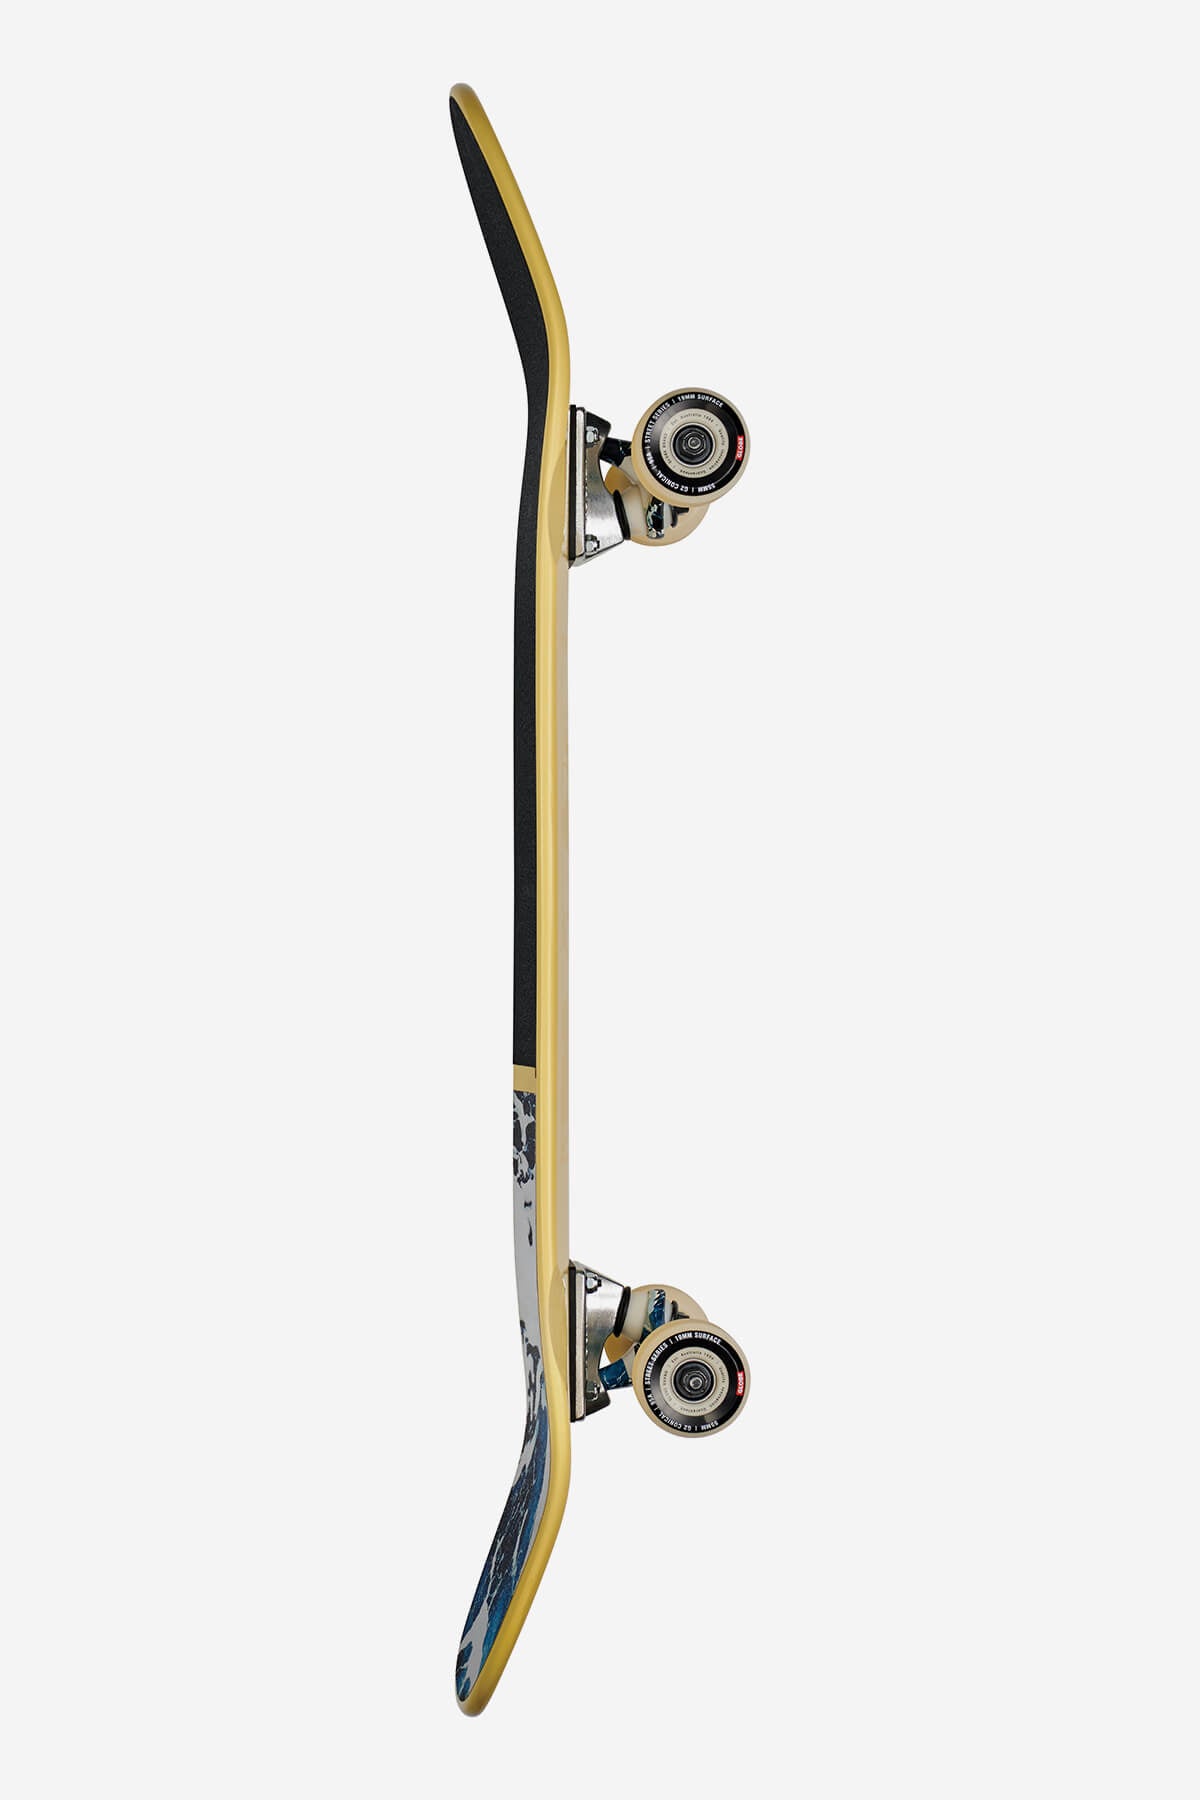 Globe - Shooter - Yellow/Comehell - 8.625" Compleet Skateboard